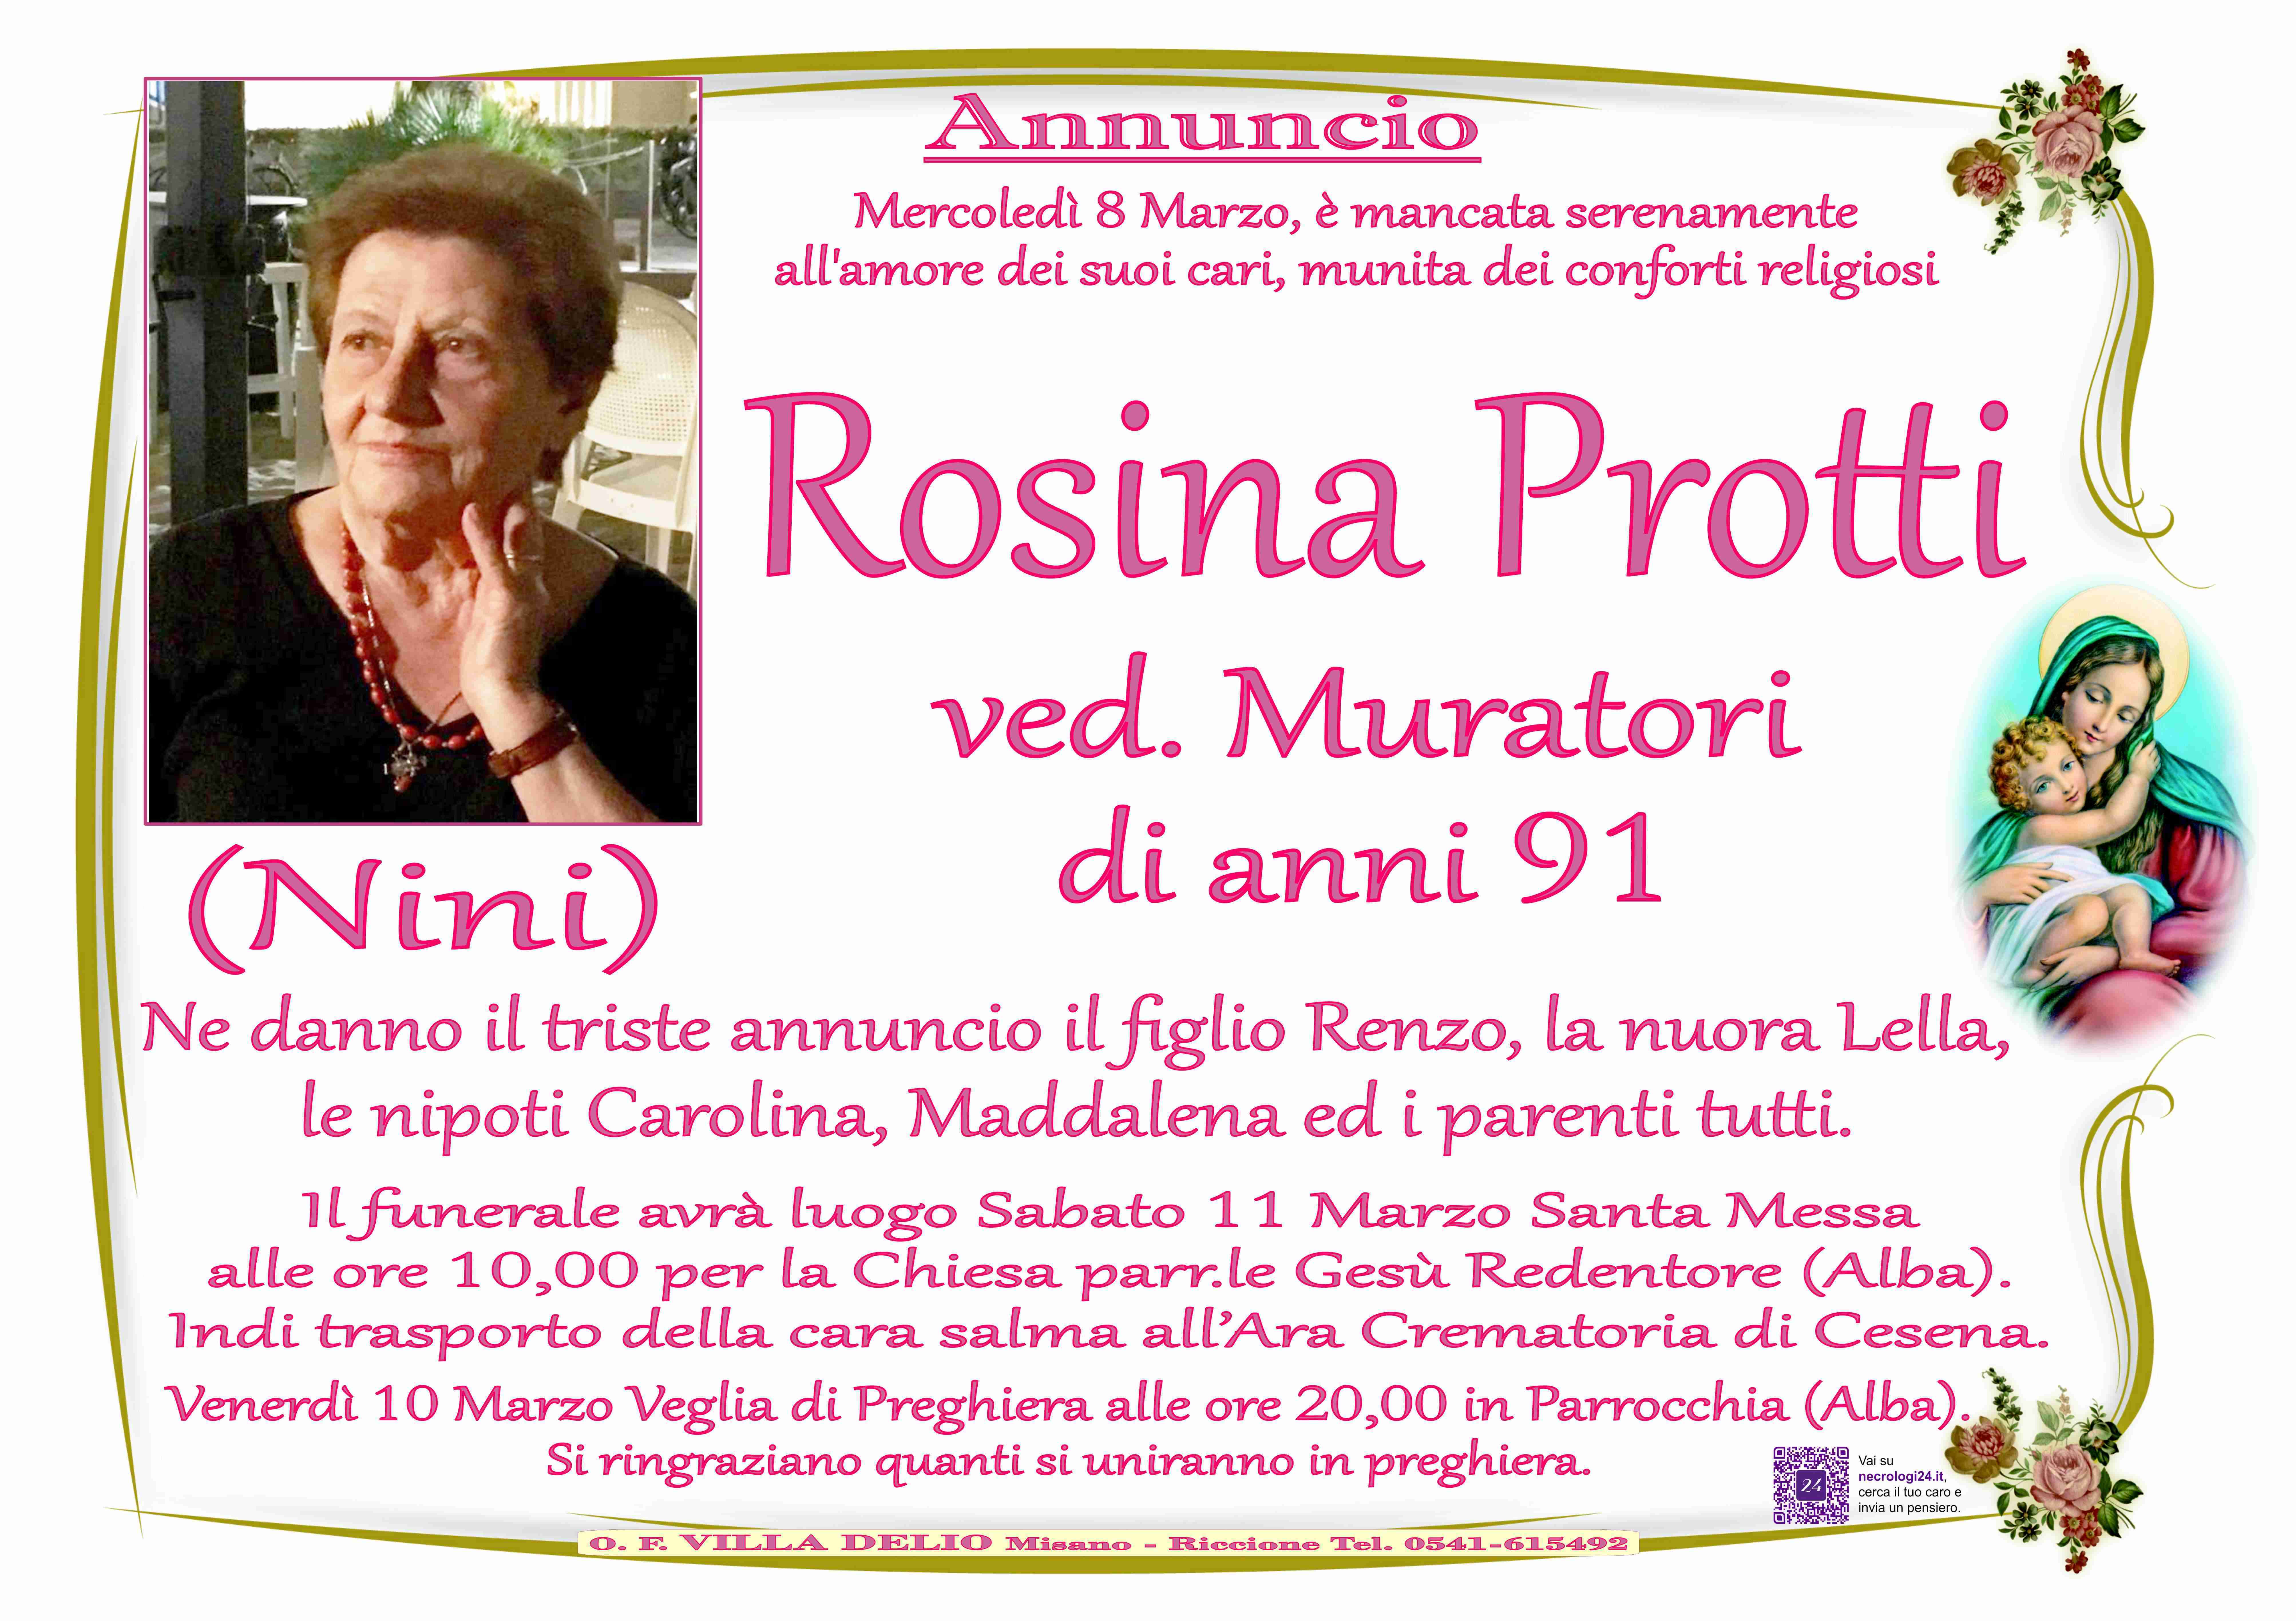 Rosina Protti